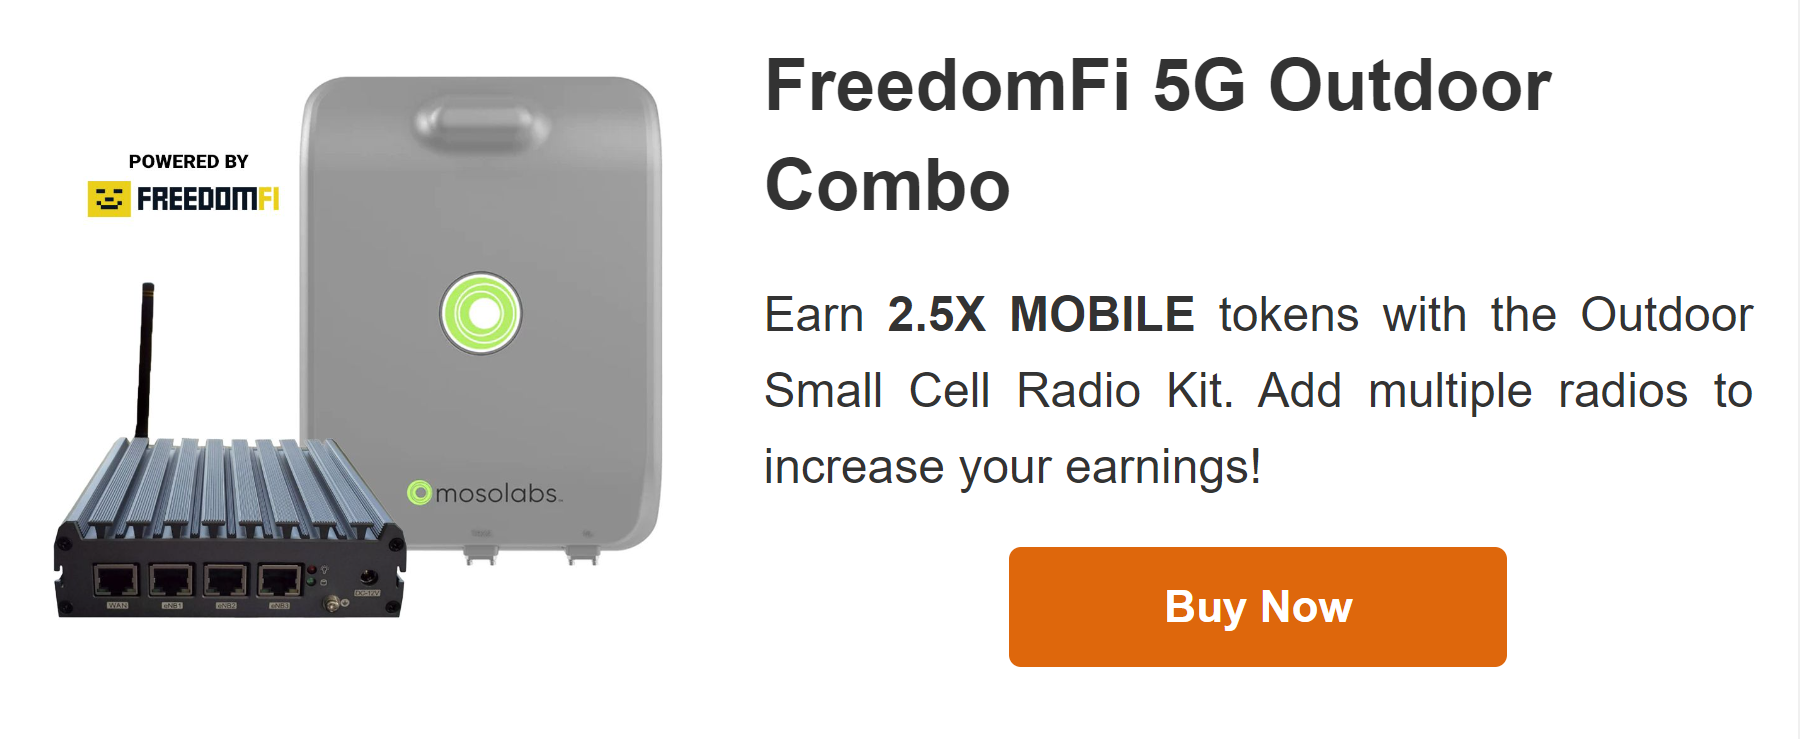 FreedomFi 5G Outdoor Combo